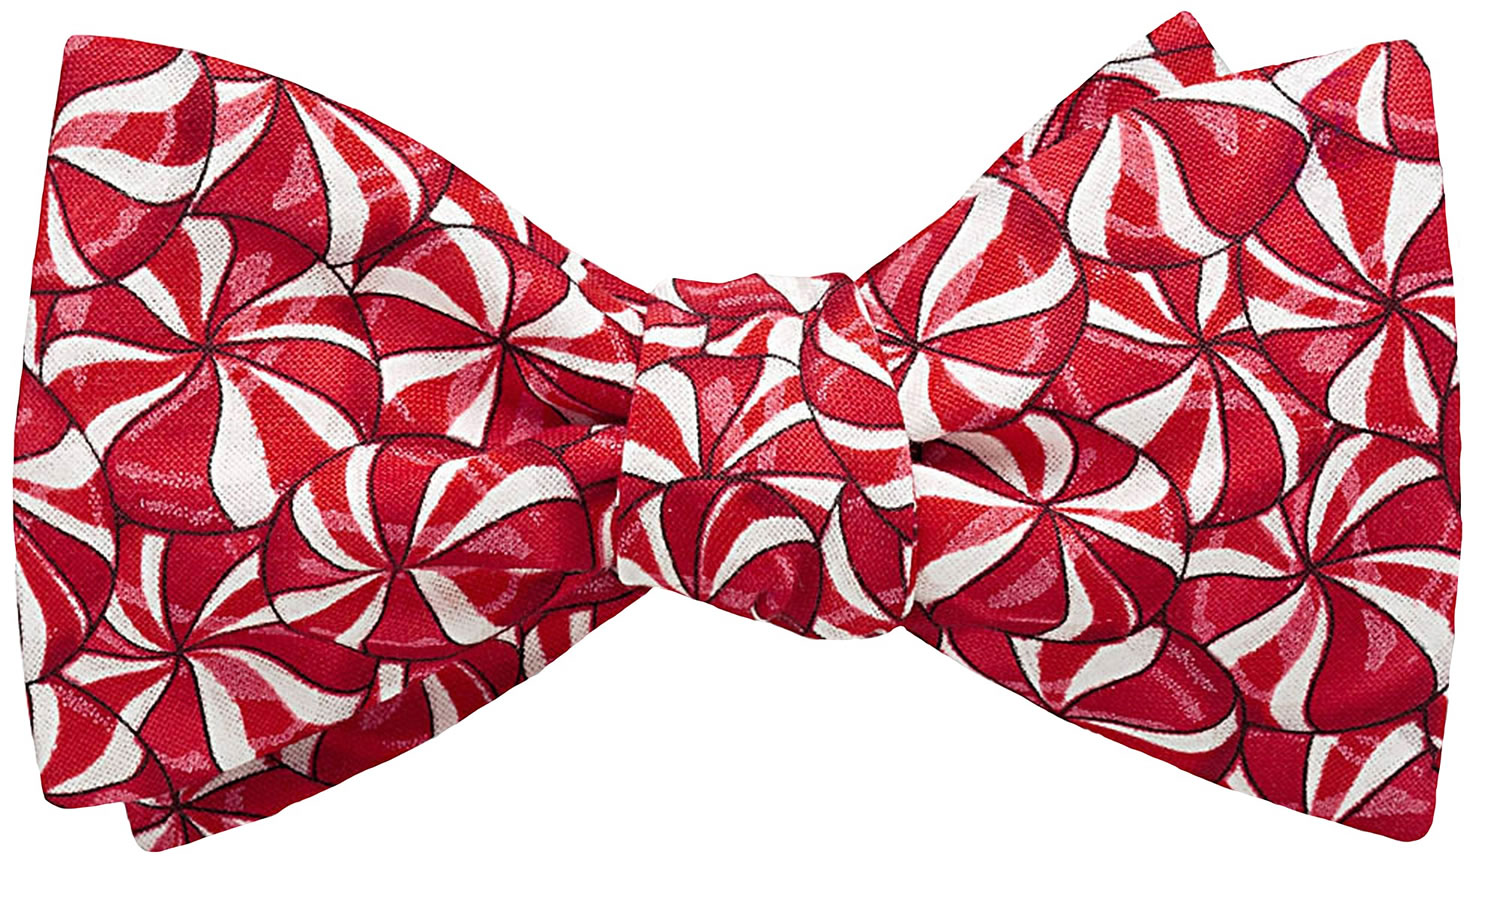 Beau Ties peppermint bow tie in cotton, $40 at BeauTiesLtd.com.